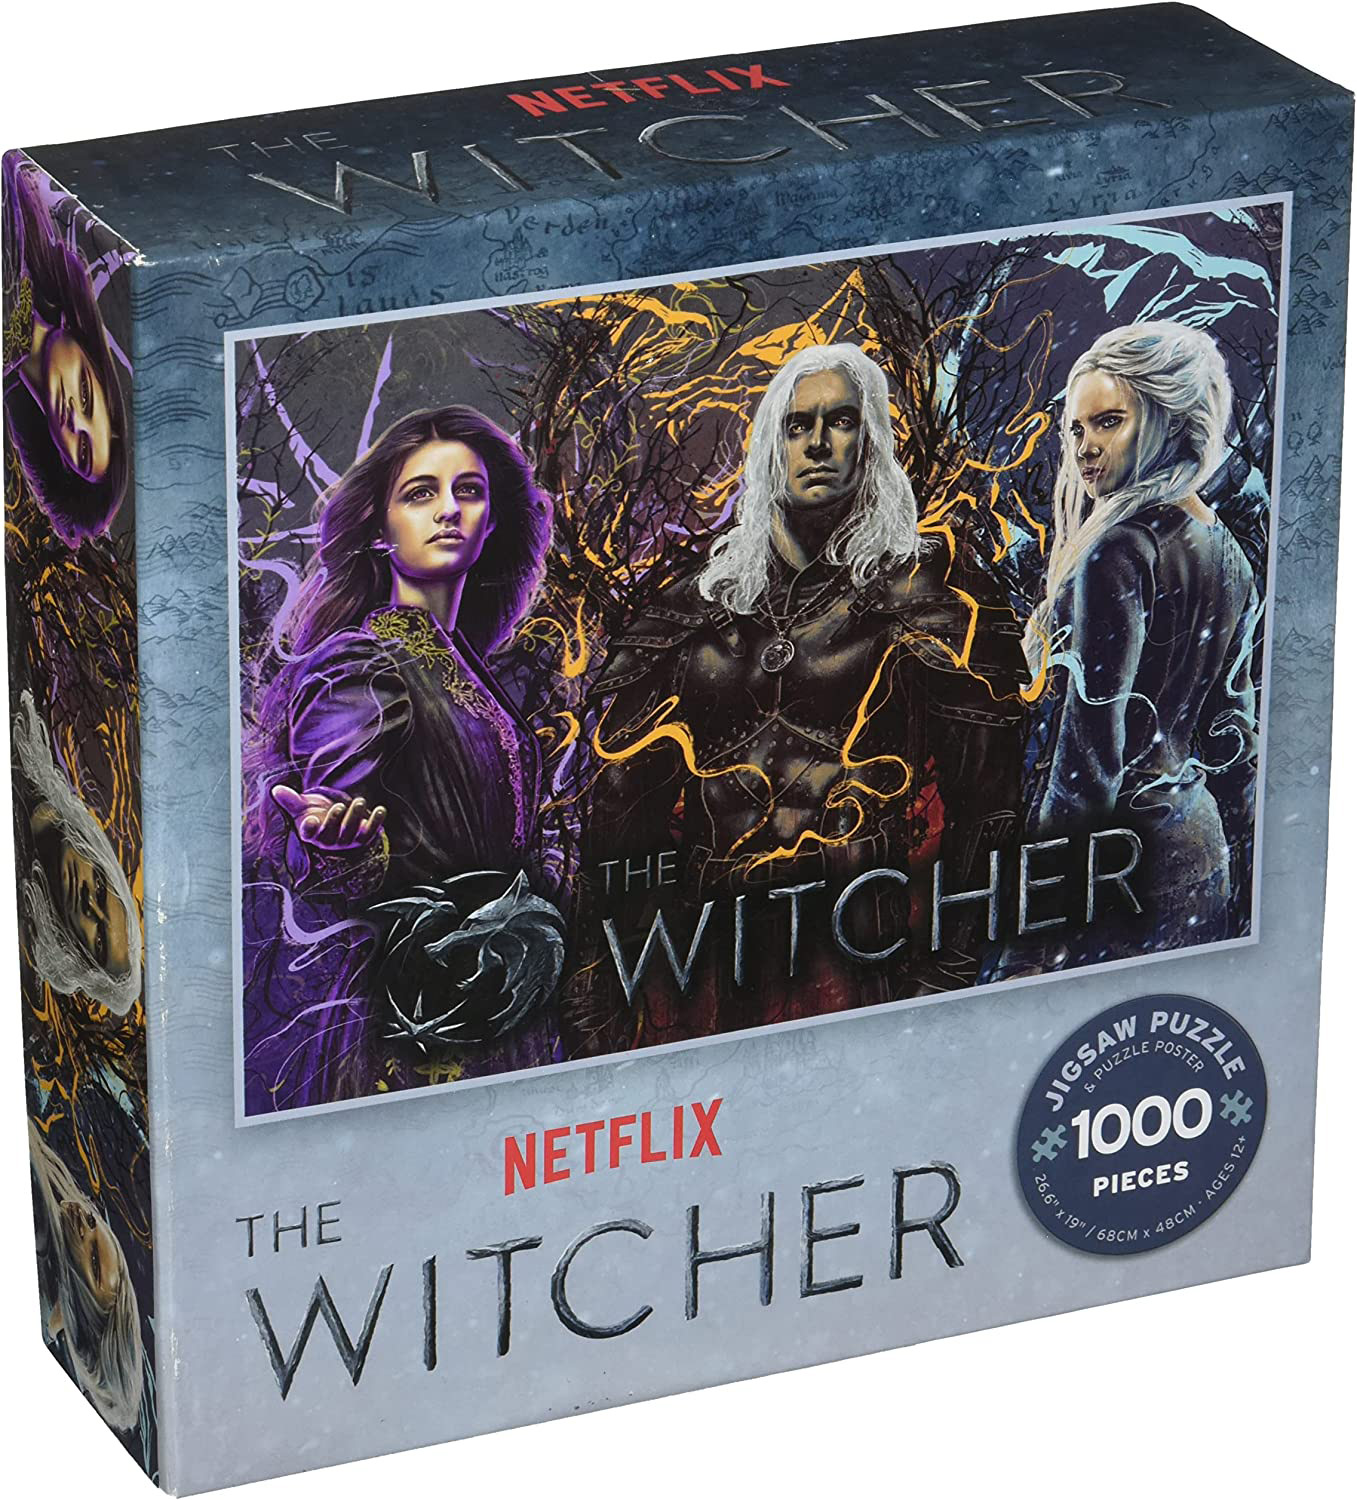 Netflix - The Witcher